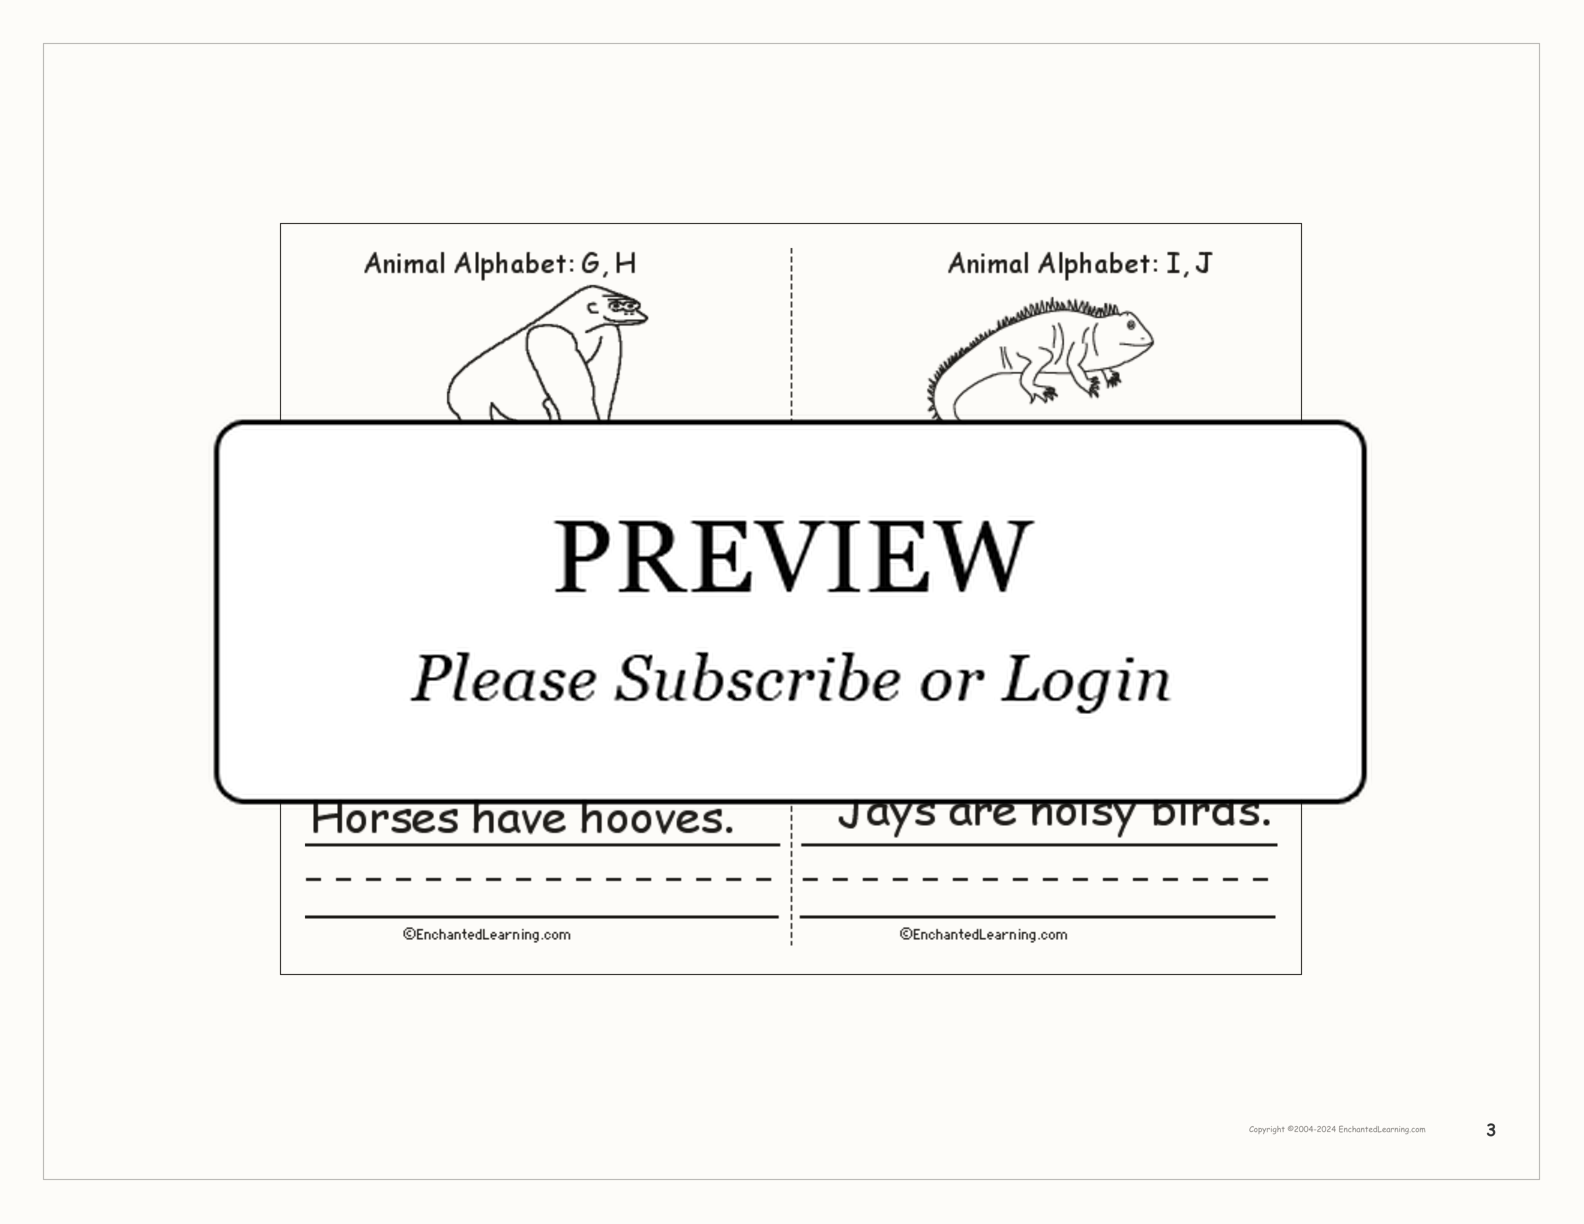 Animal Alphabet Book interactive printout page 3